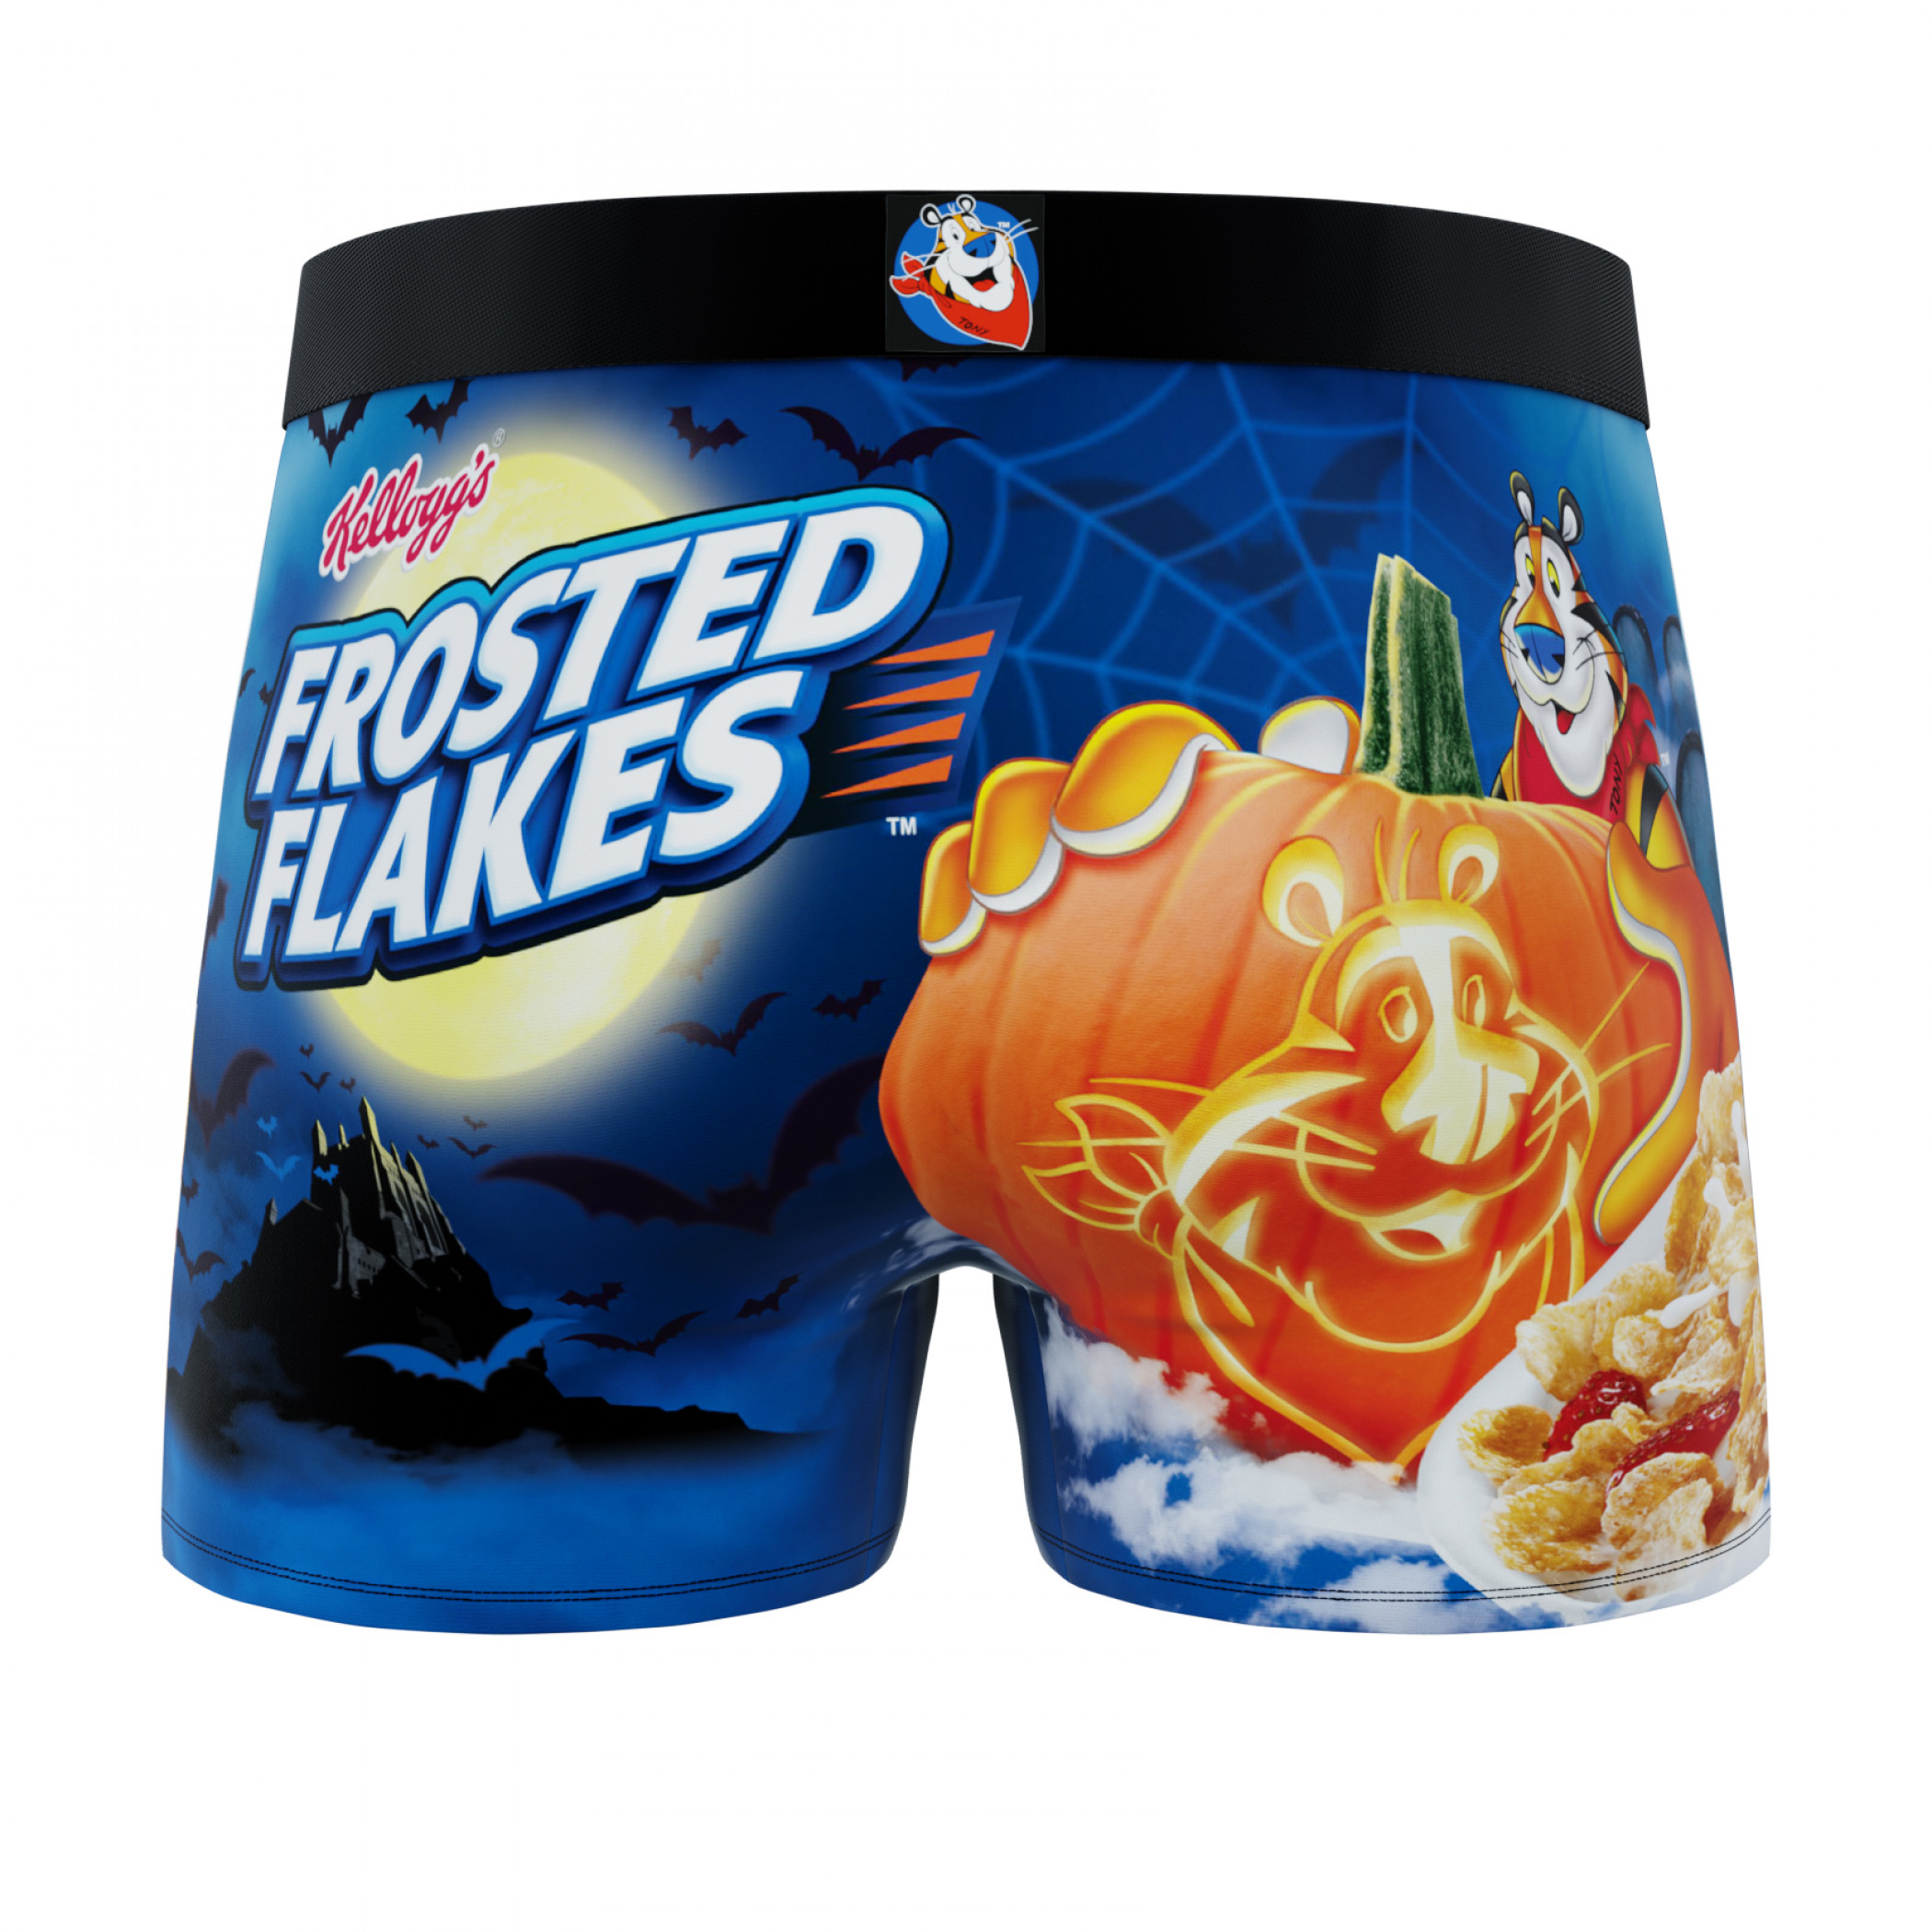 Crazy Boxer Kellogg's Halloween Frosted Flakes Men's Boxer Briefs